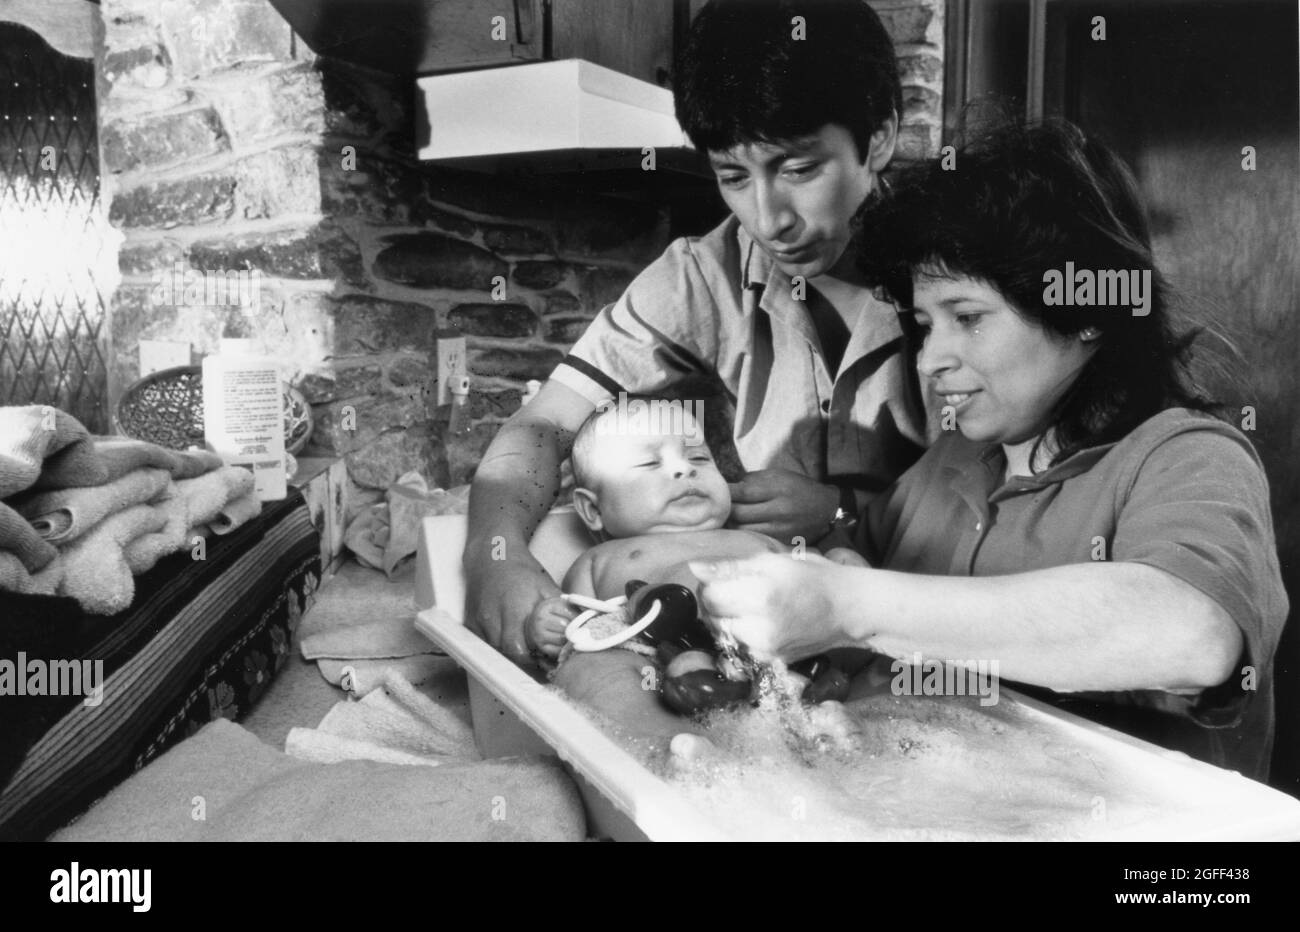 Austin Texas USA, circa 1989: Hispanic parents bathing their baby, MR XRE-0336, 0337   MR OK  original in color   ©Bob Daemmrich Stock Photo